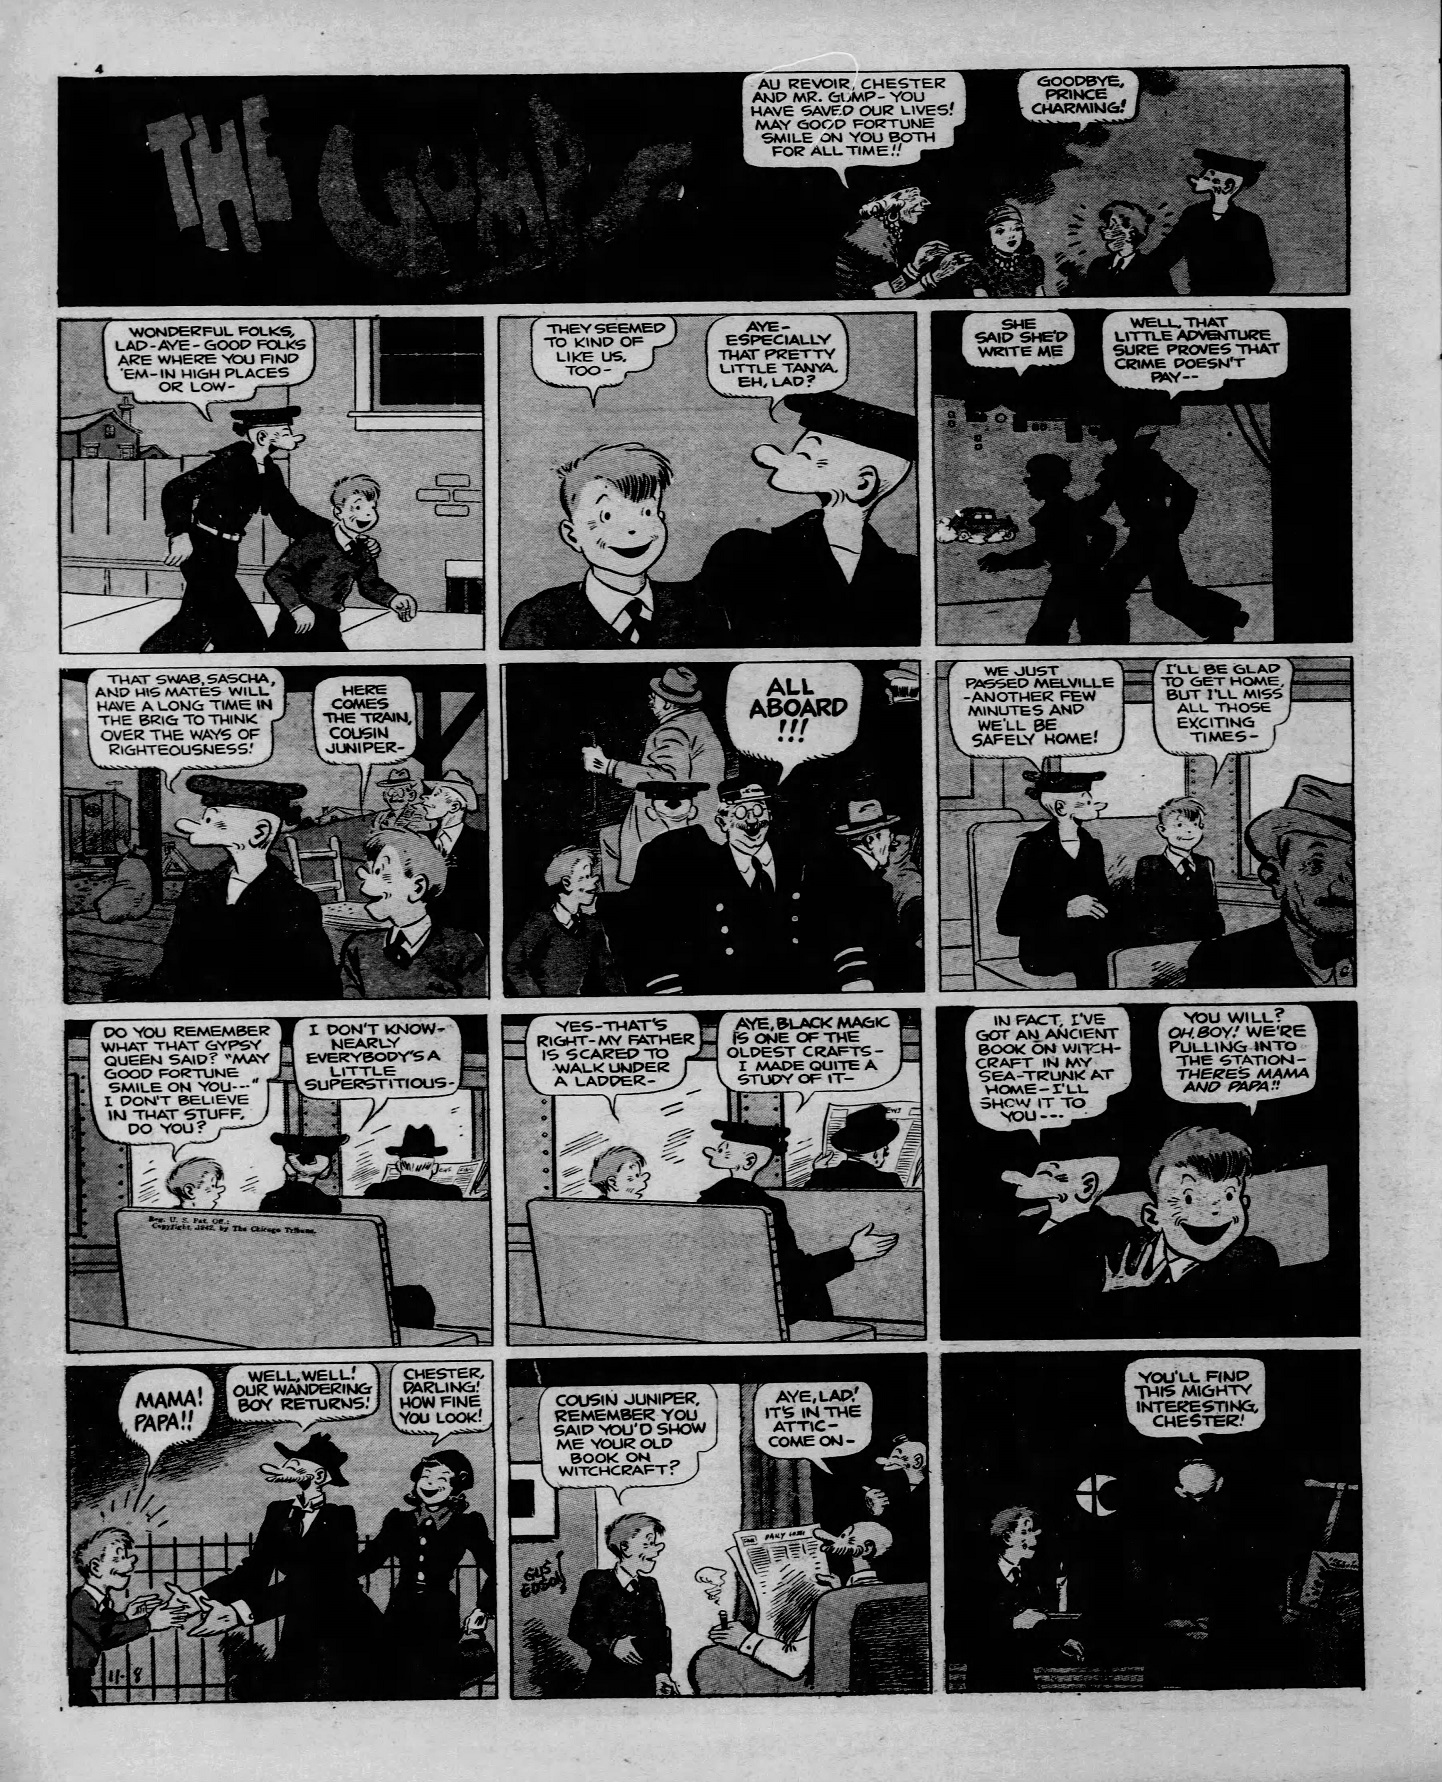 Daily_News_Sun__Nov_8__1942_(5).jpg